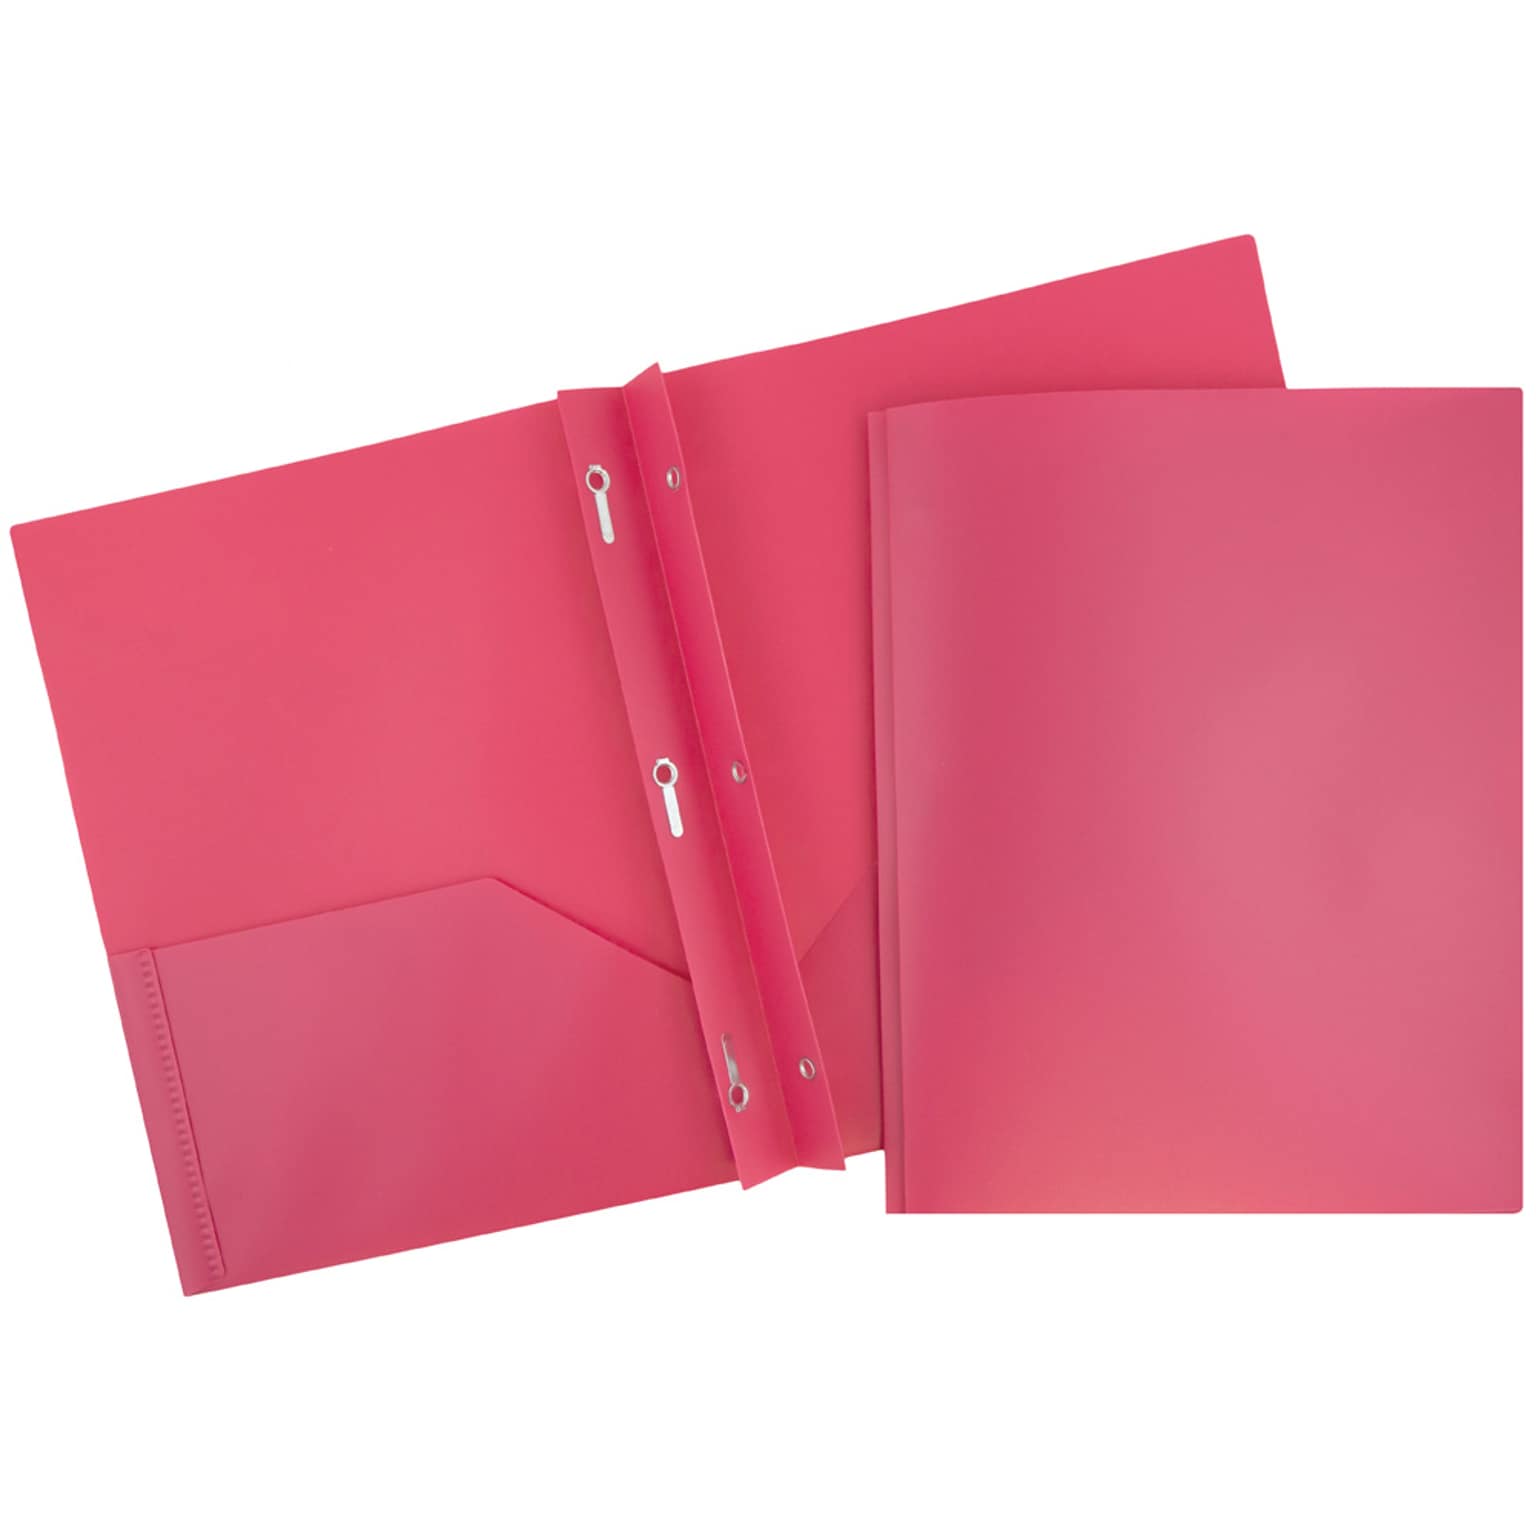 JAM Paper POP 2-Pocket Plastic Folders with Metal Prongs Fastener Clasps, Fuchsia Hot Pink, 6/Pack (382ECfu)